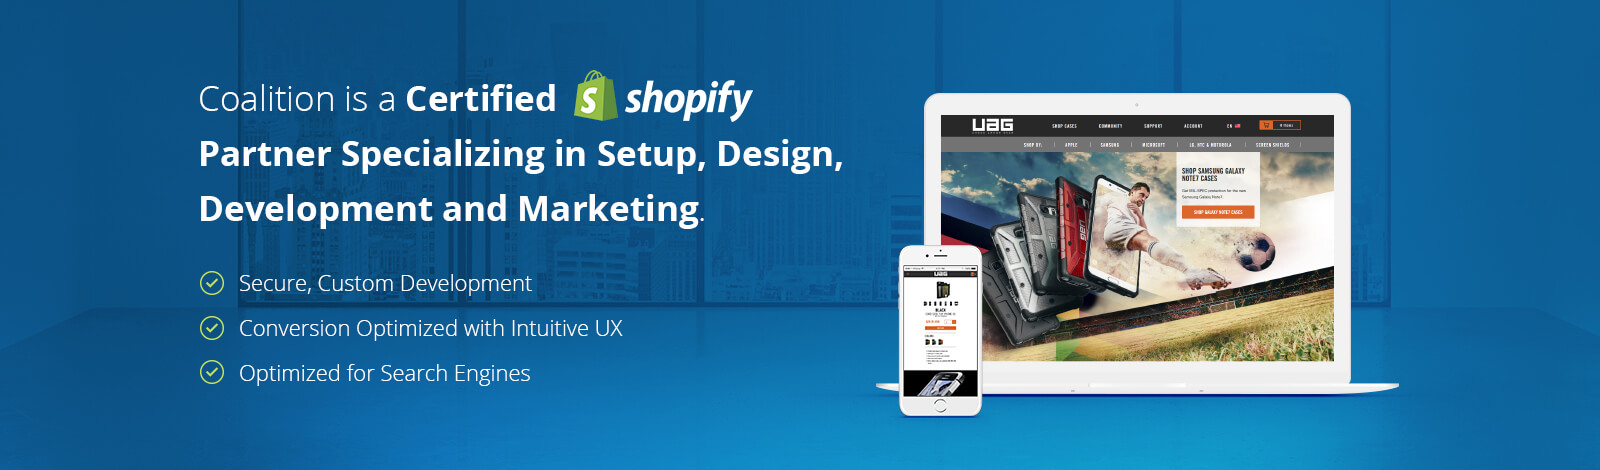 Shopify Website Design & Development Service in Los Angeles